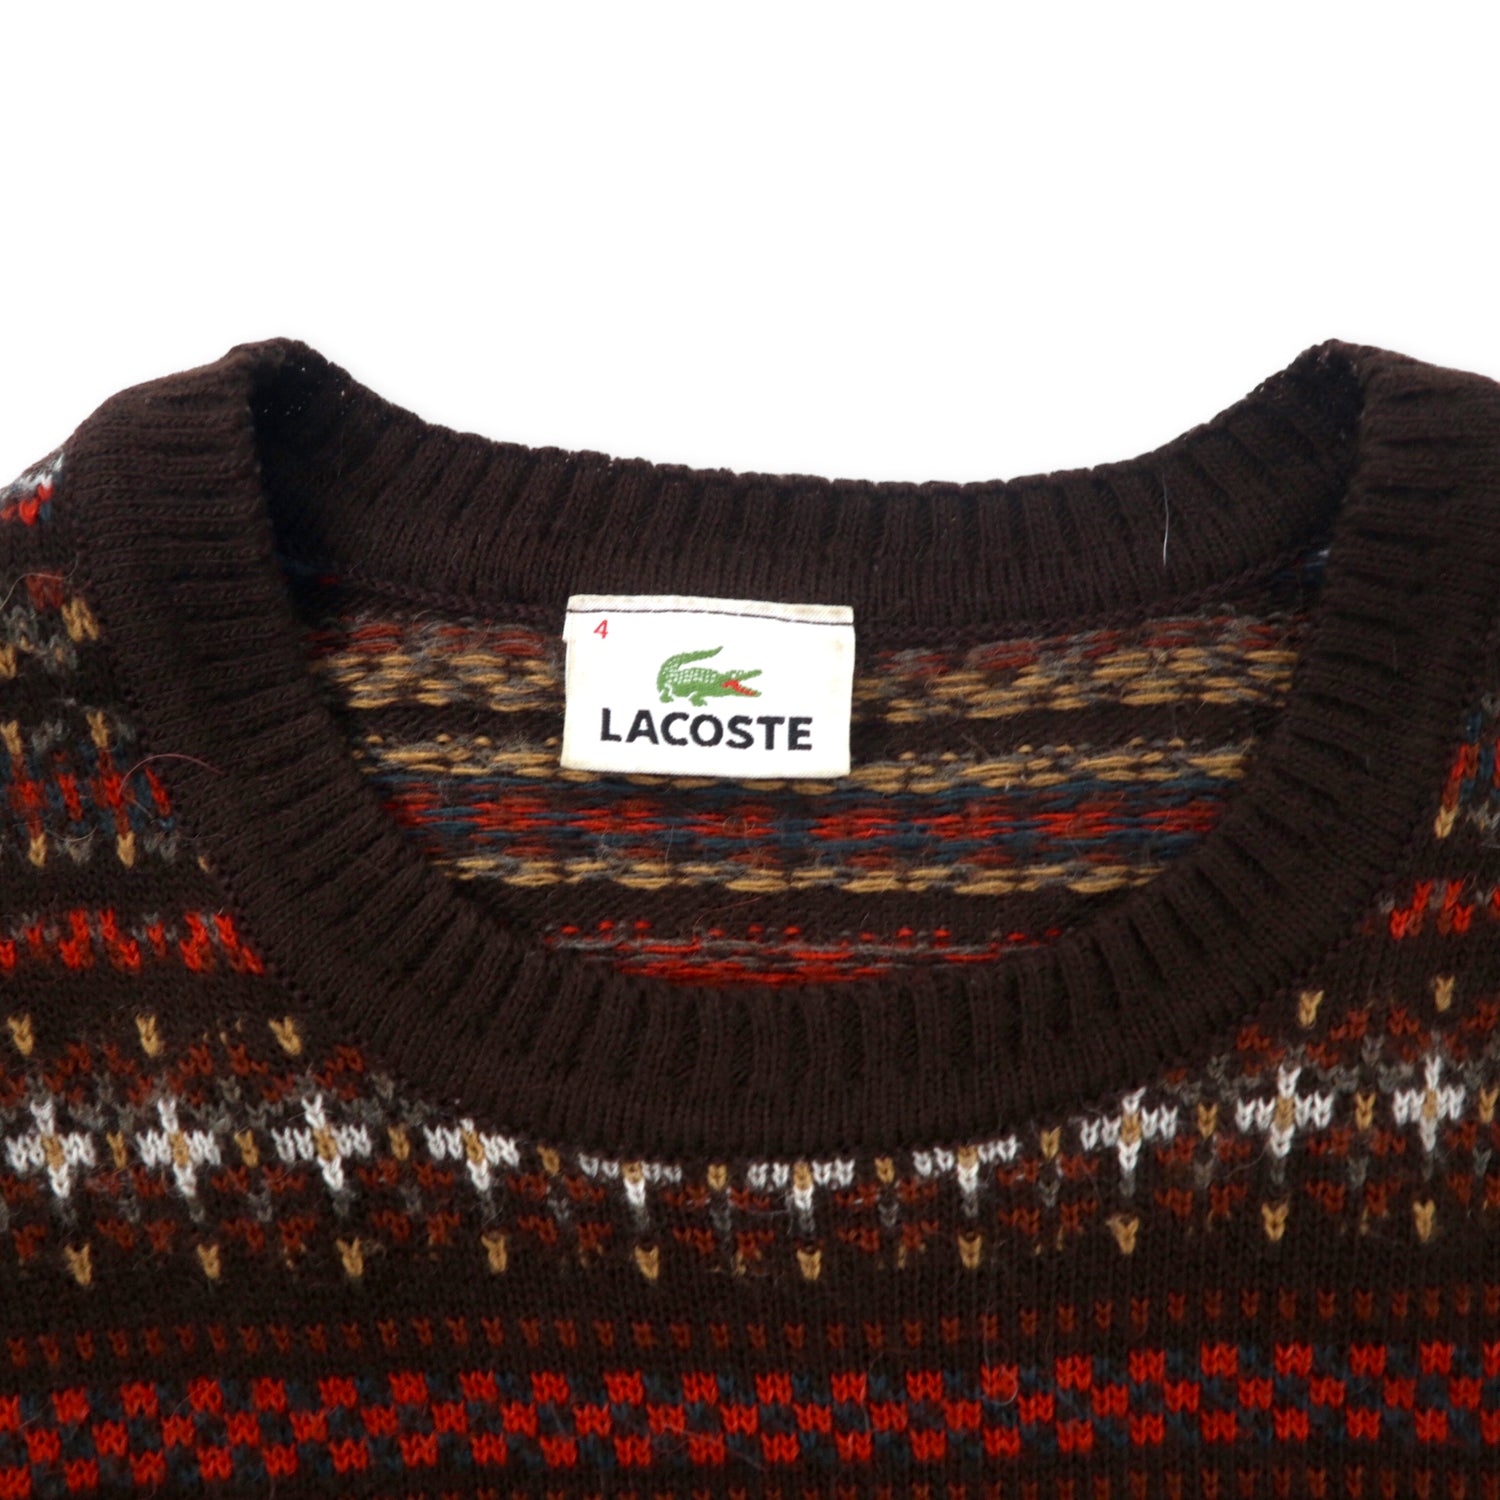 Lacoste Nordic pattern knit sweater 4 Brown Acrylic Wool Alpaca 